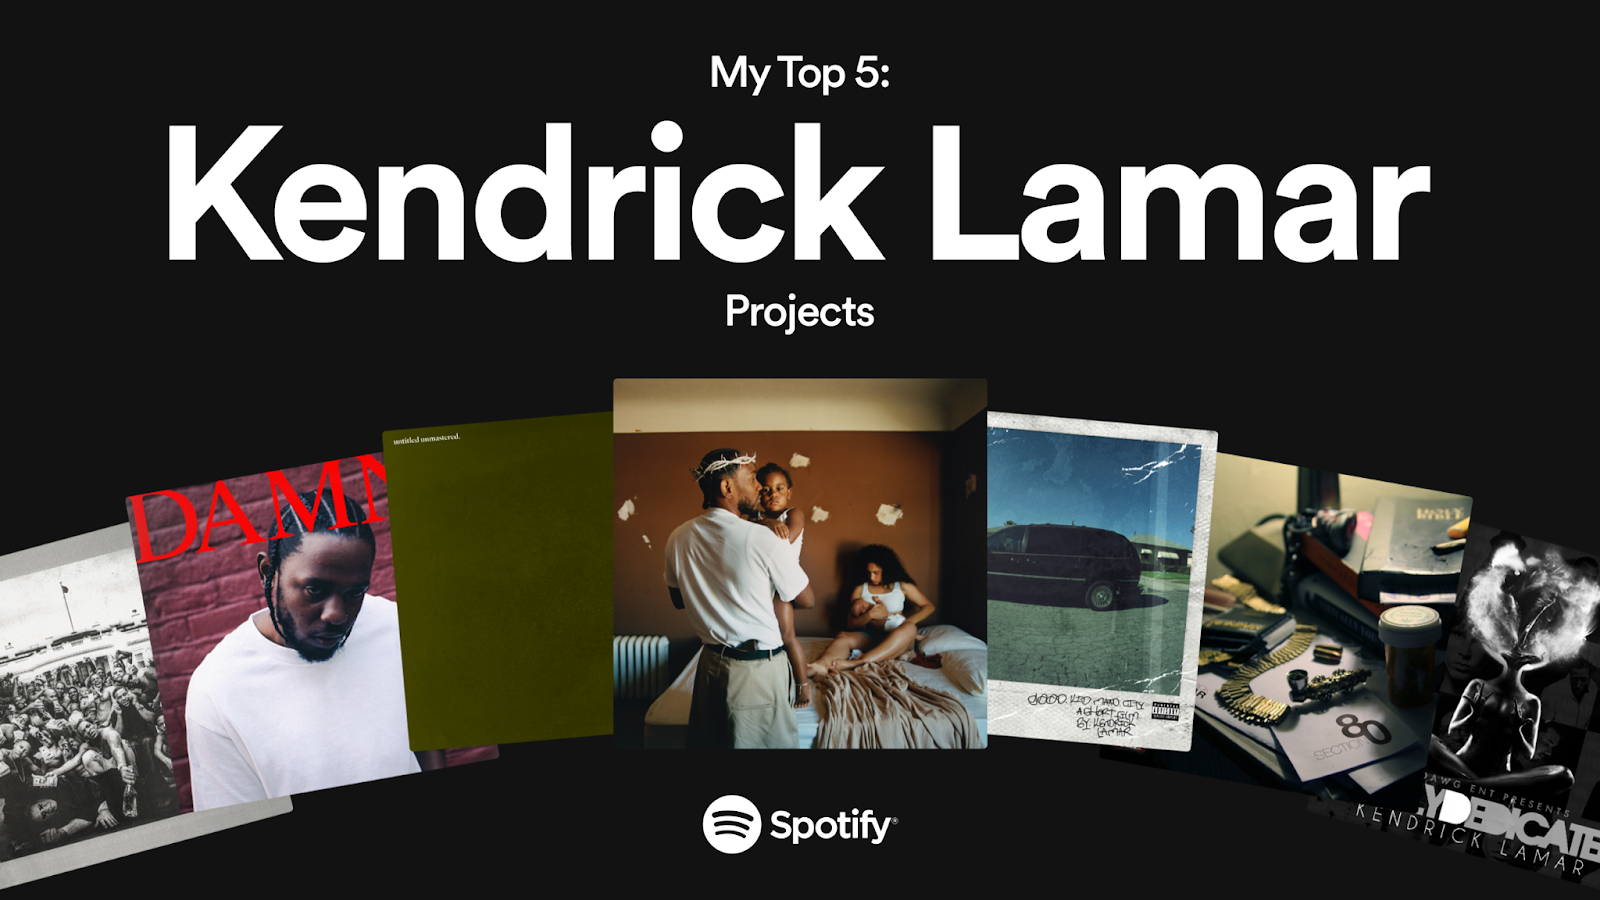 Kendrick Lamar Spotify lança experiência interativa para fãs do rapper